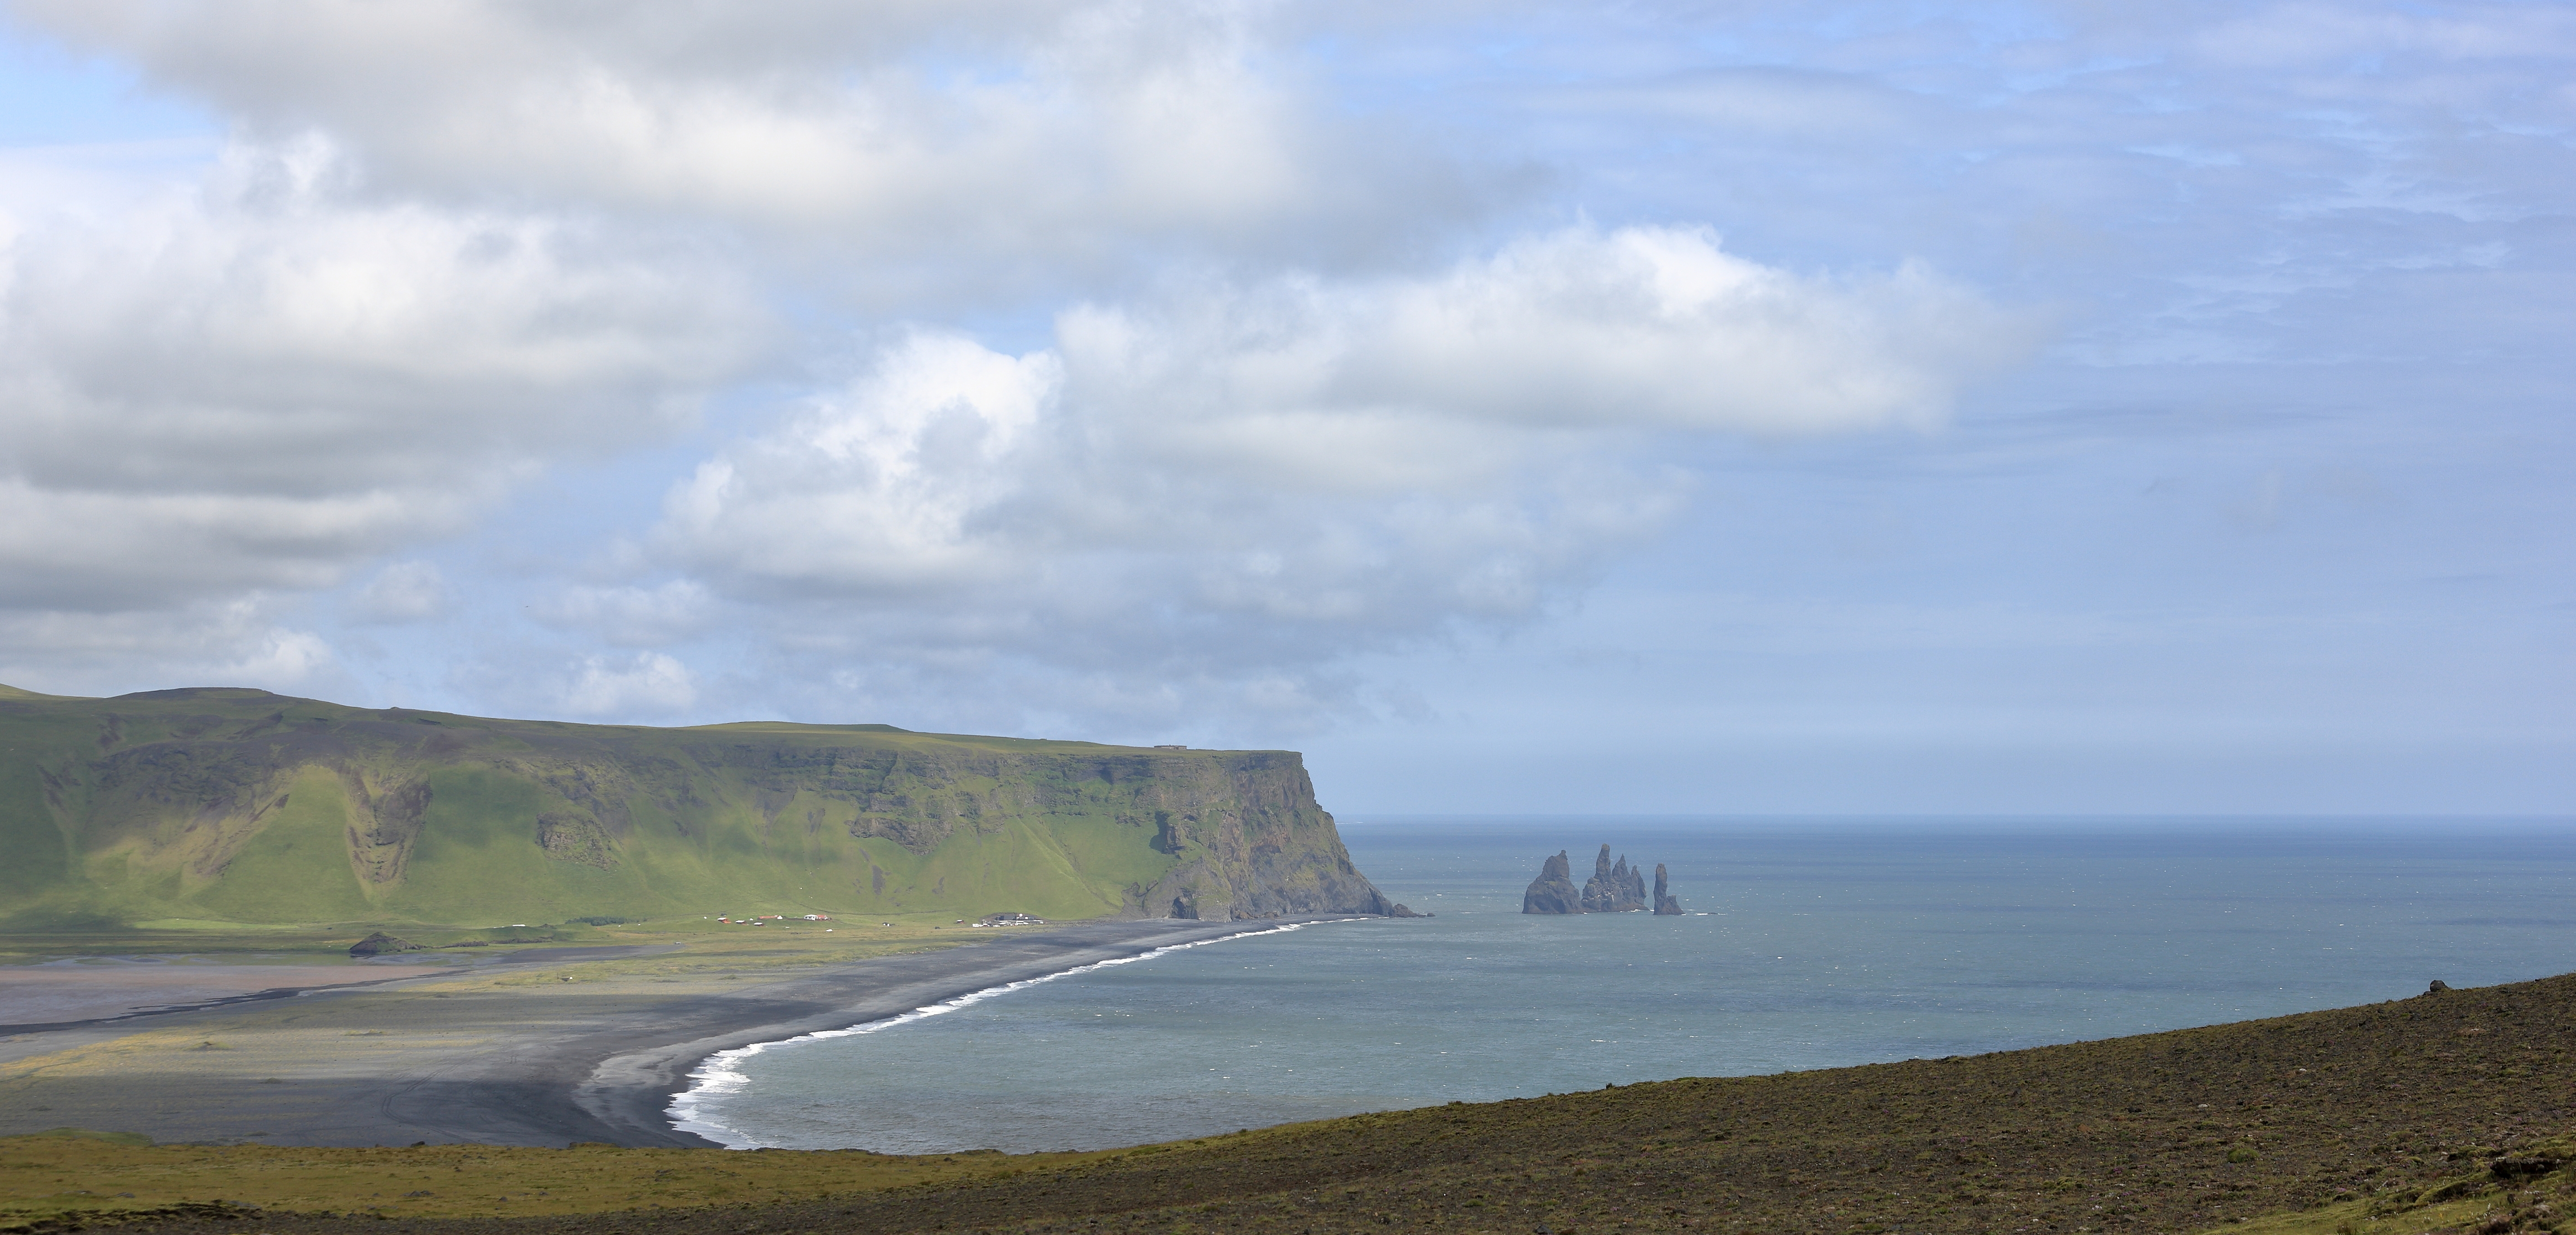 The beach of Reynisfjara and Reynisdrangar, basalt sea stacks, as seen from Dyrhólaey, Iceland. Photo taken on July 20, 2014.